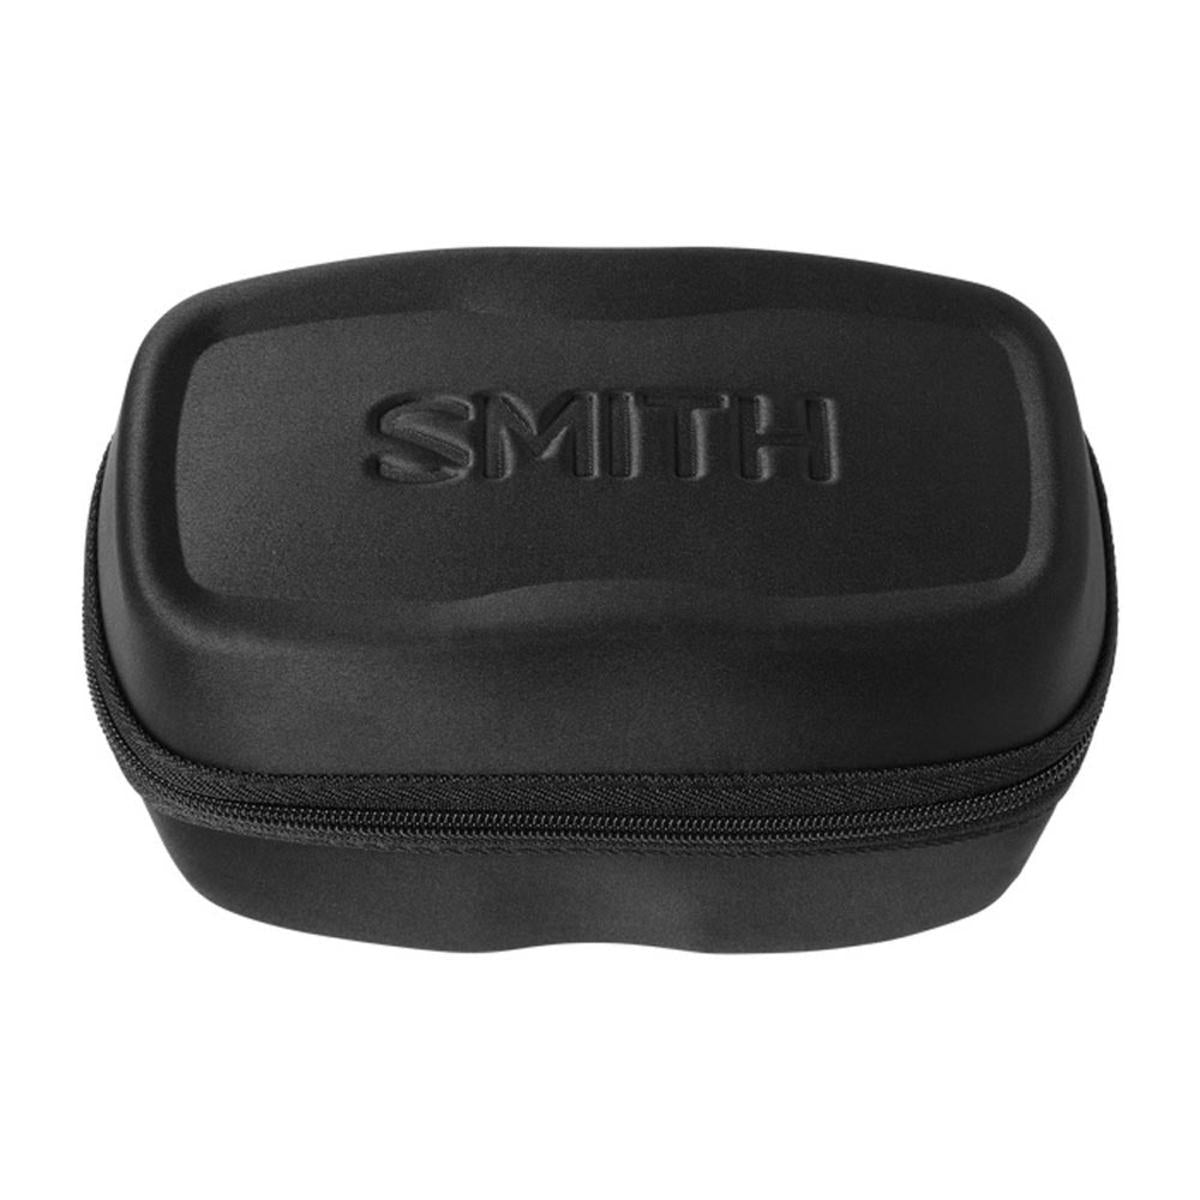 Smith Optics 4D MAG Goggles ChromaPop Everyday Rose Gold - White Vapor Frame